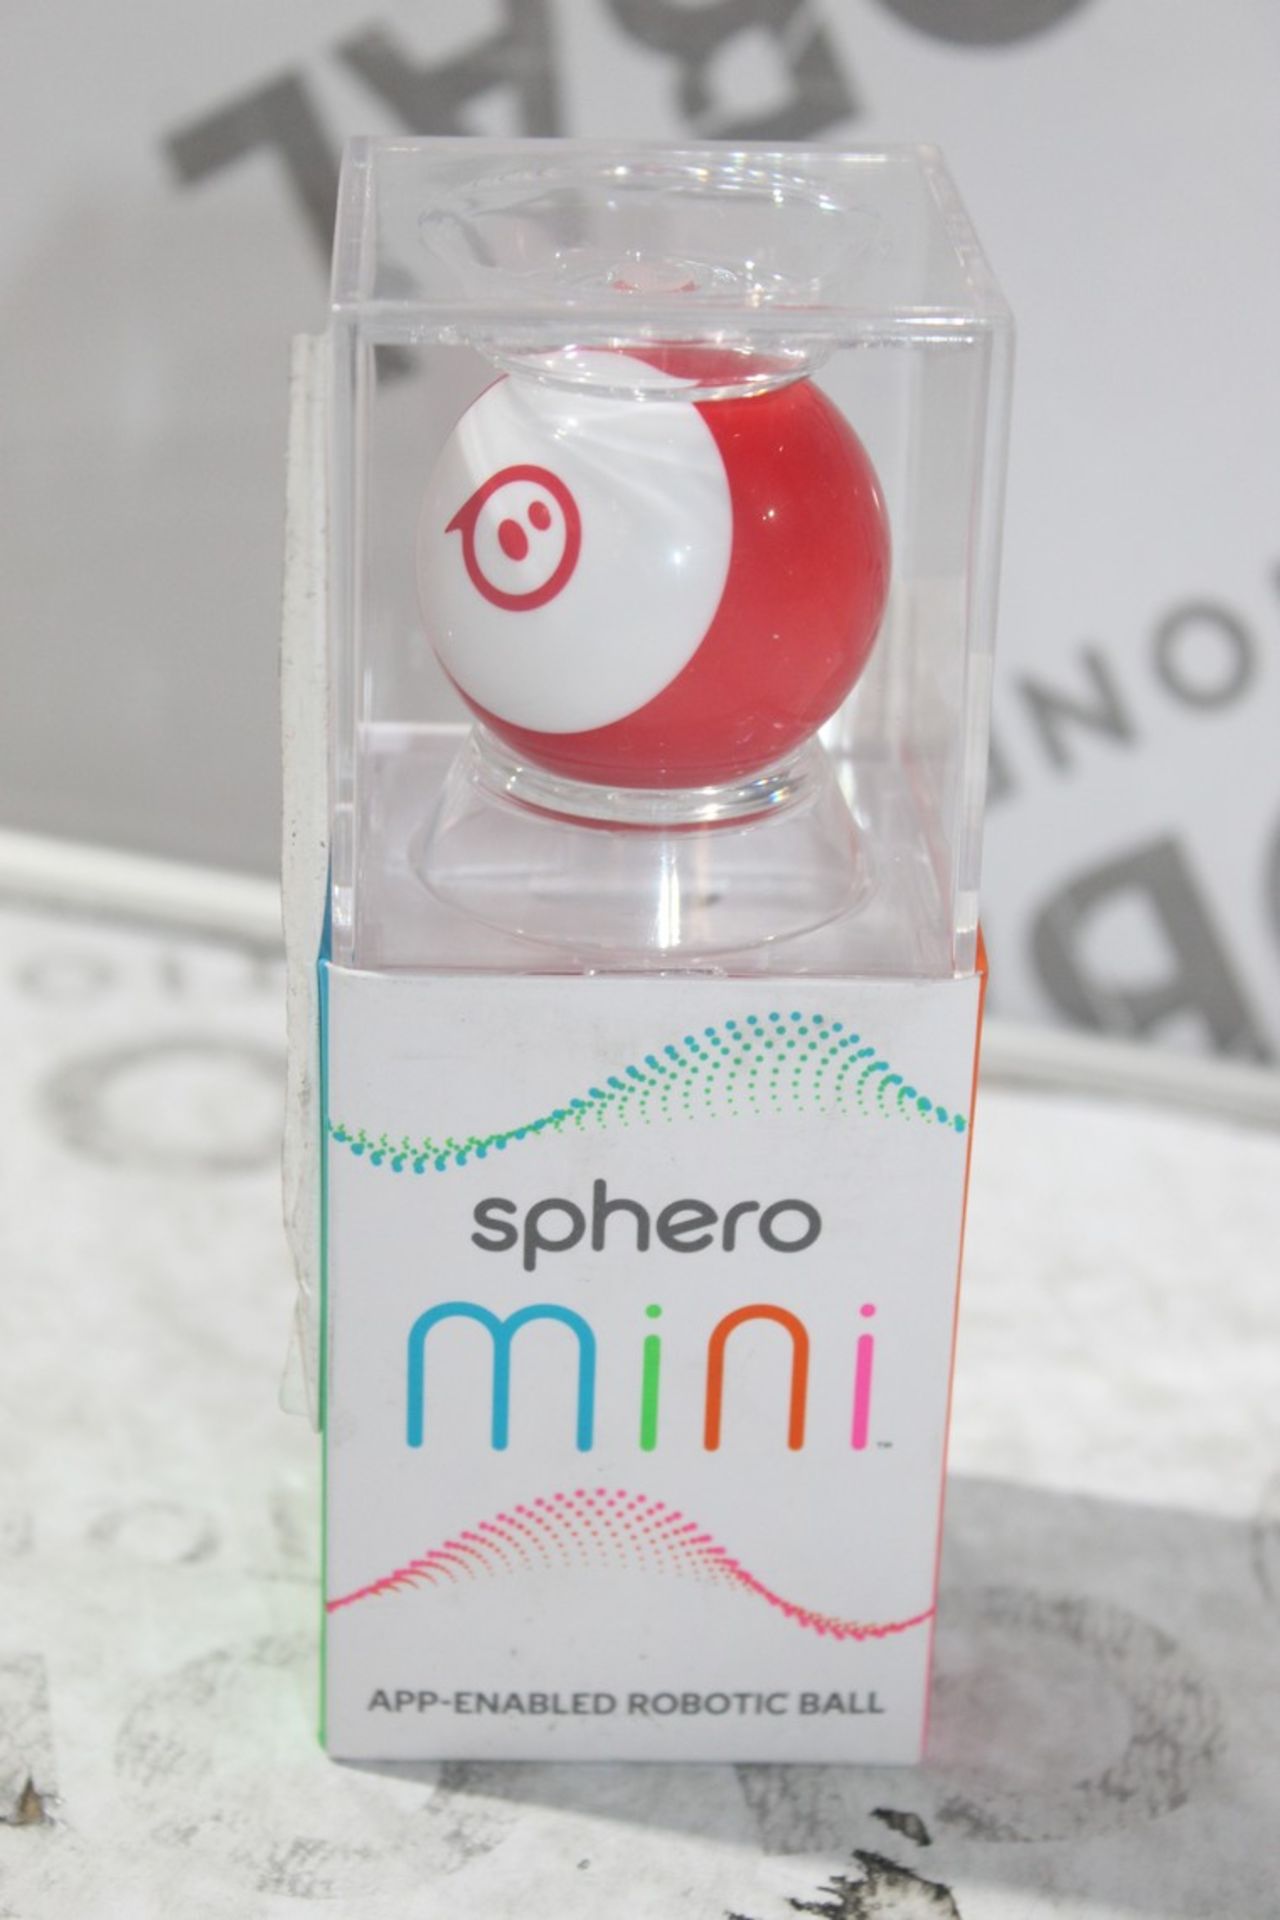 Boxed Sphero Mini, App Enabled, Robotic Ball, In R